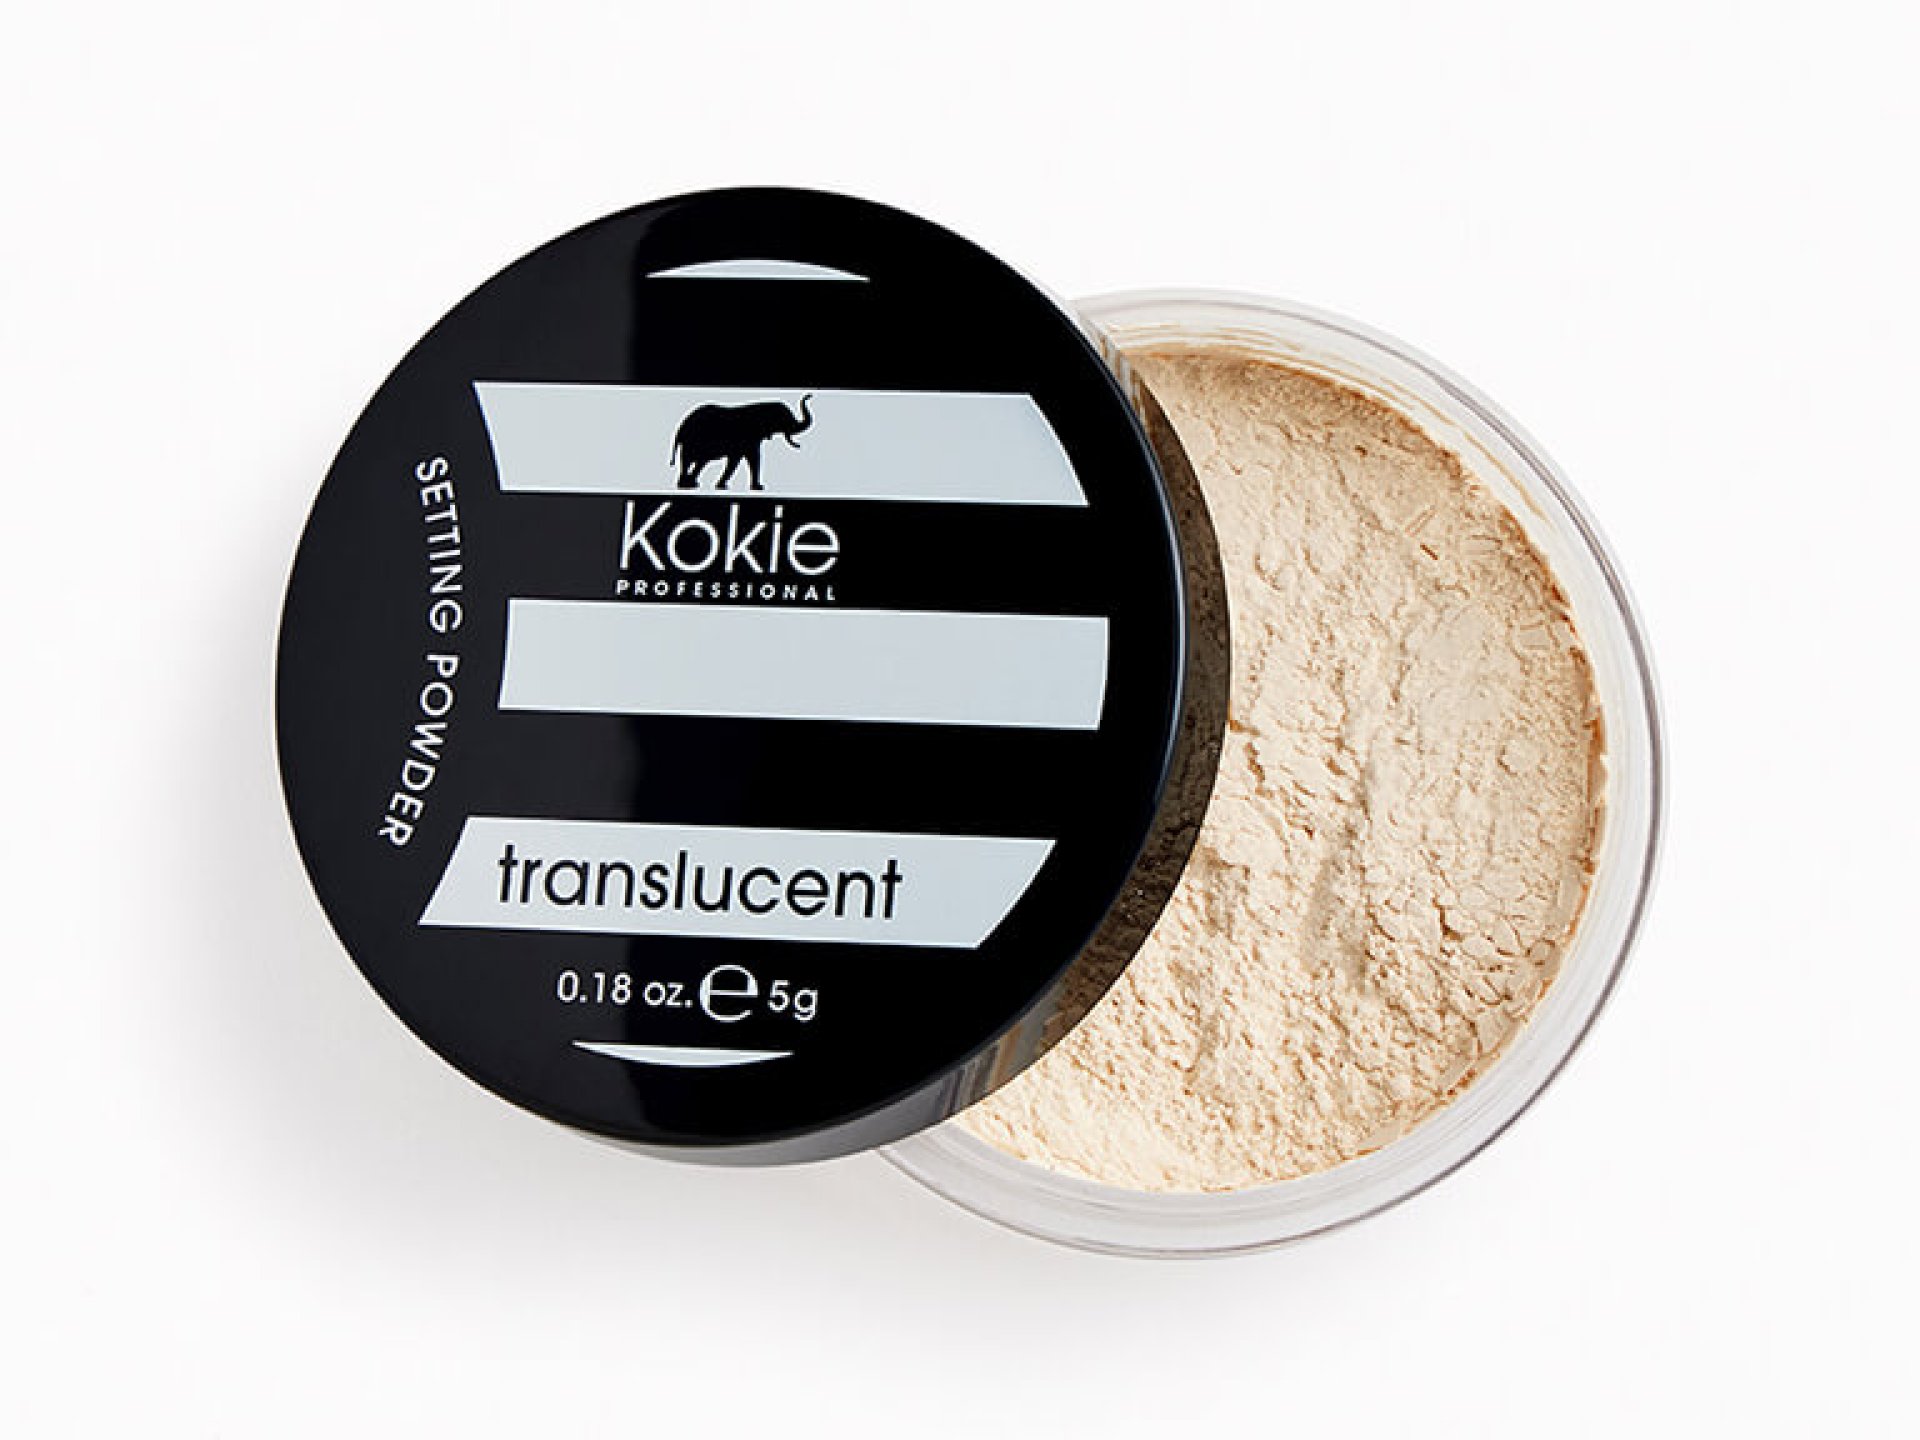 KOKIE PROFESSIONAL Translucent Loose Setting Powder